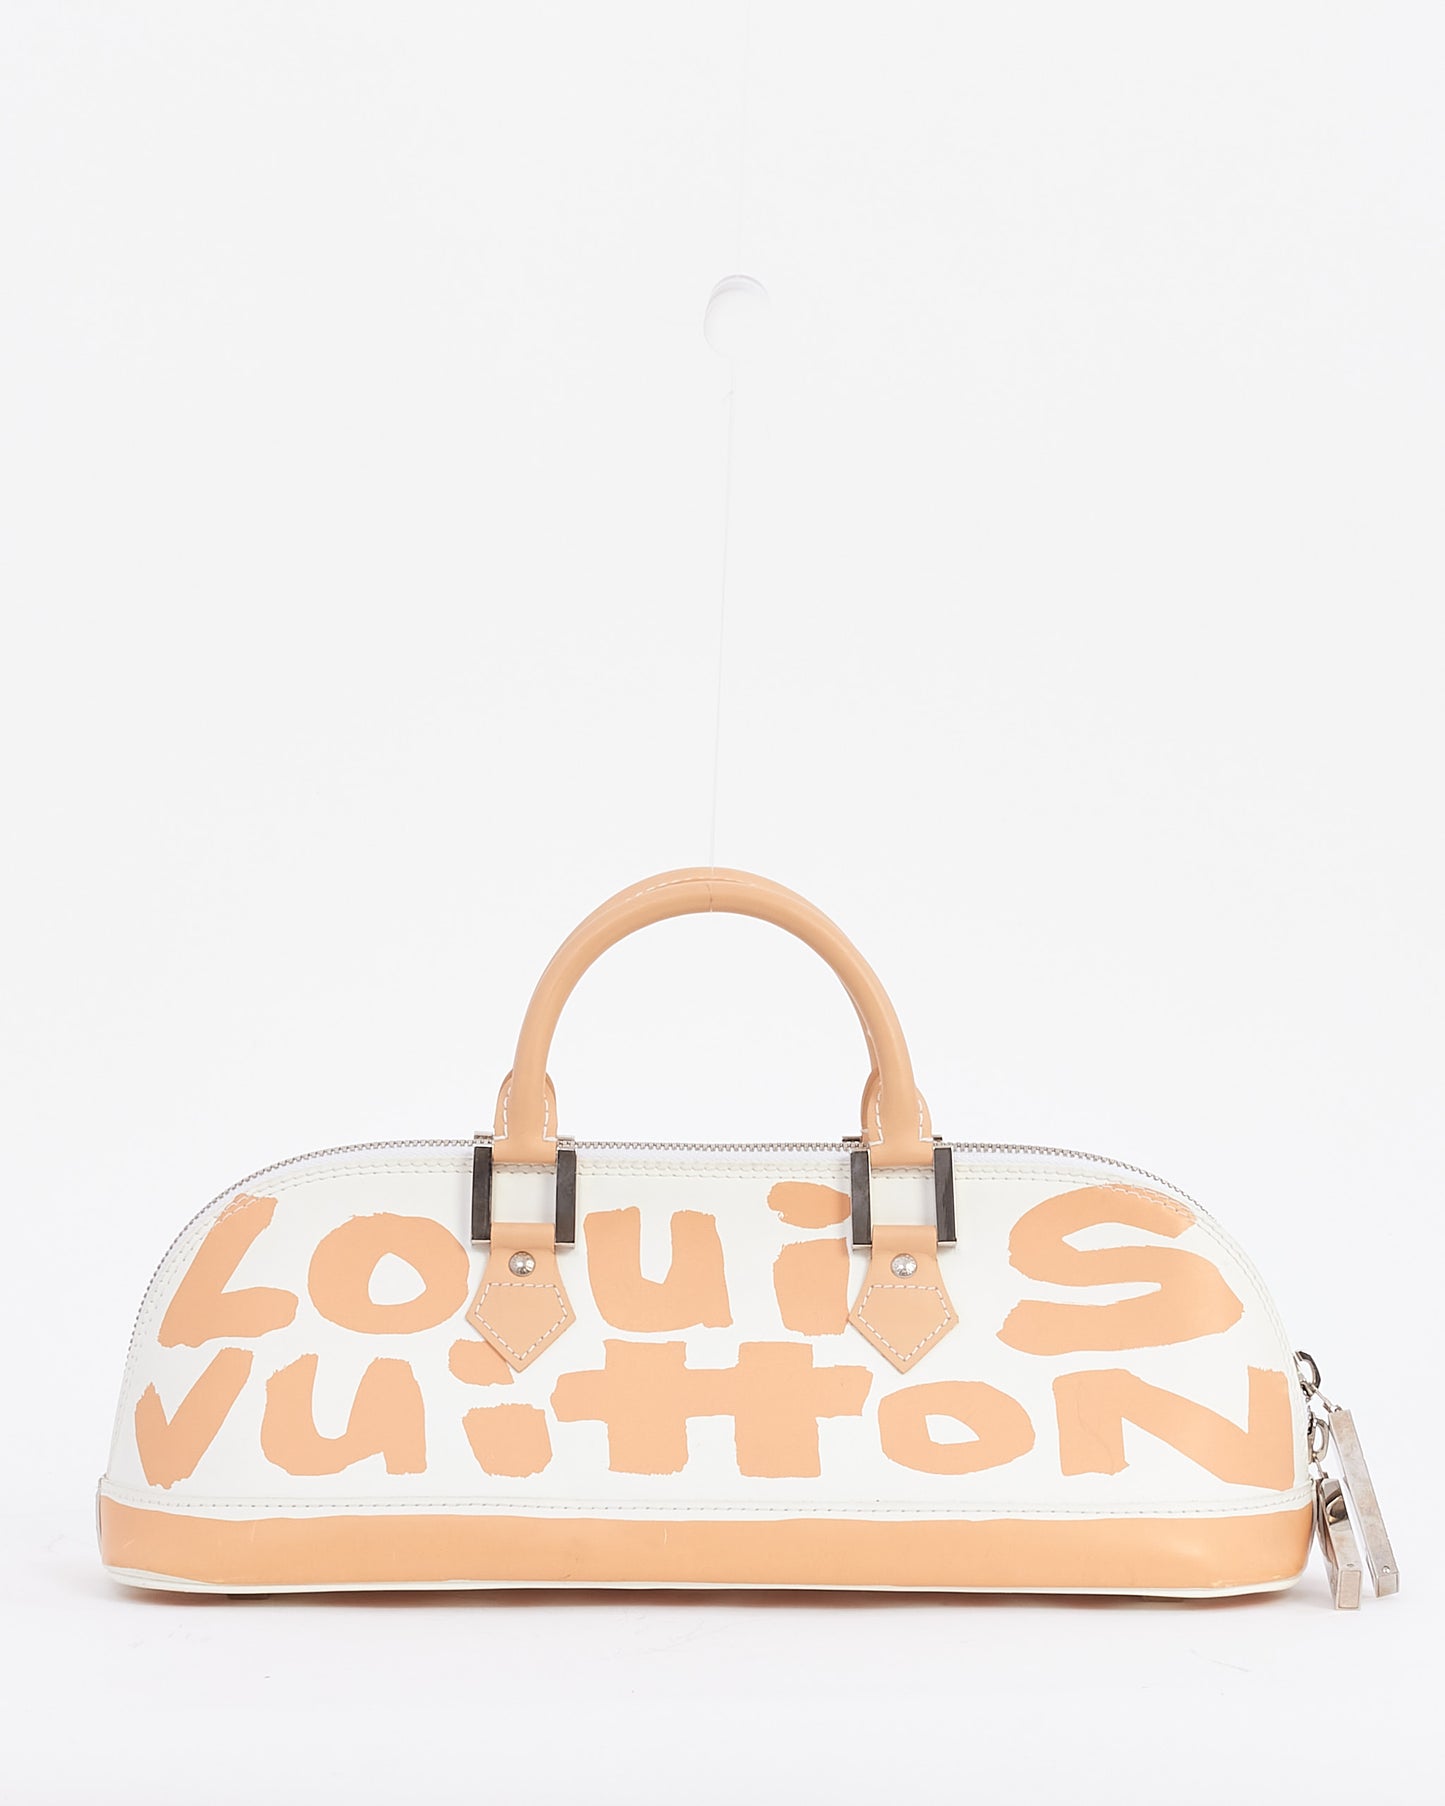 Louis Vuitton Beige/Cream Stephen Sprouse Horizontal Graffiti Alma Bag